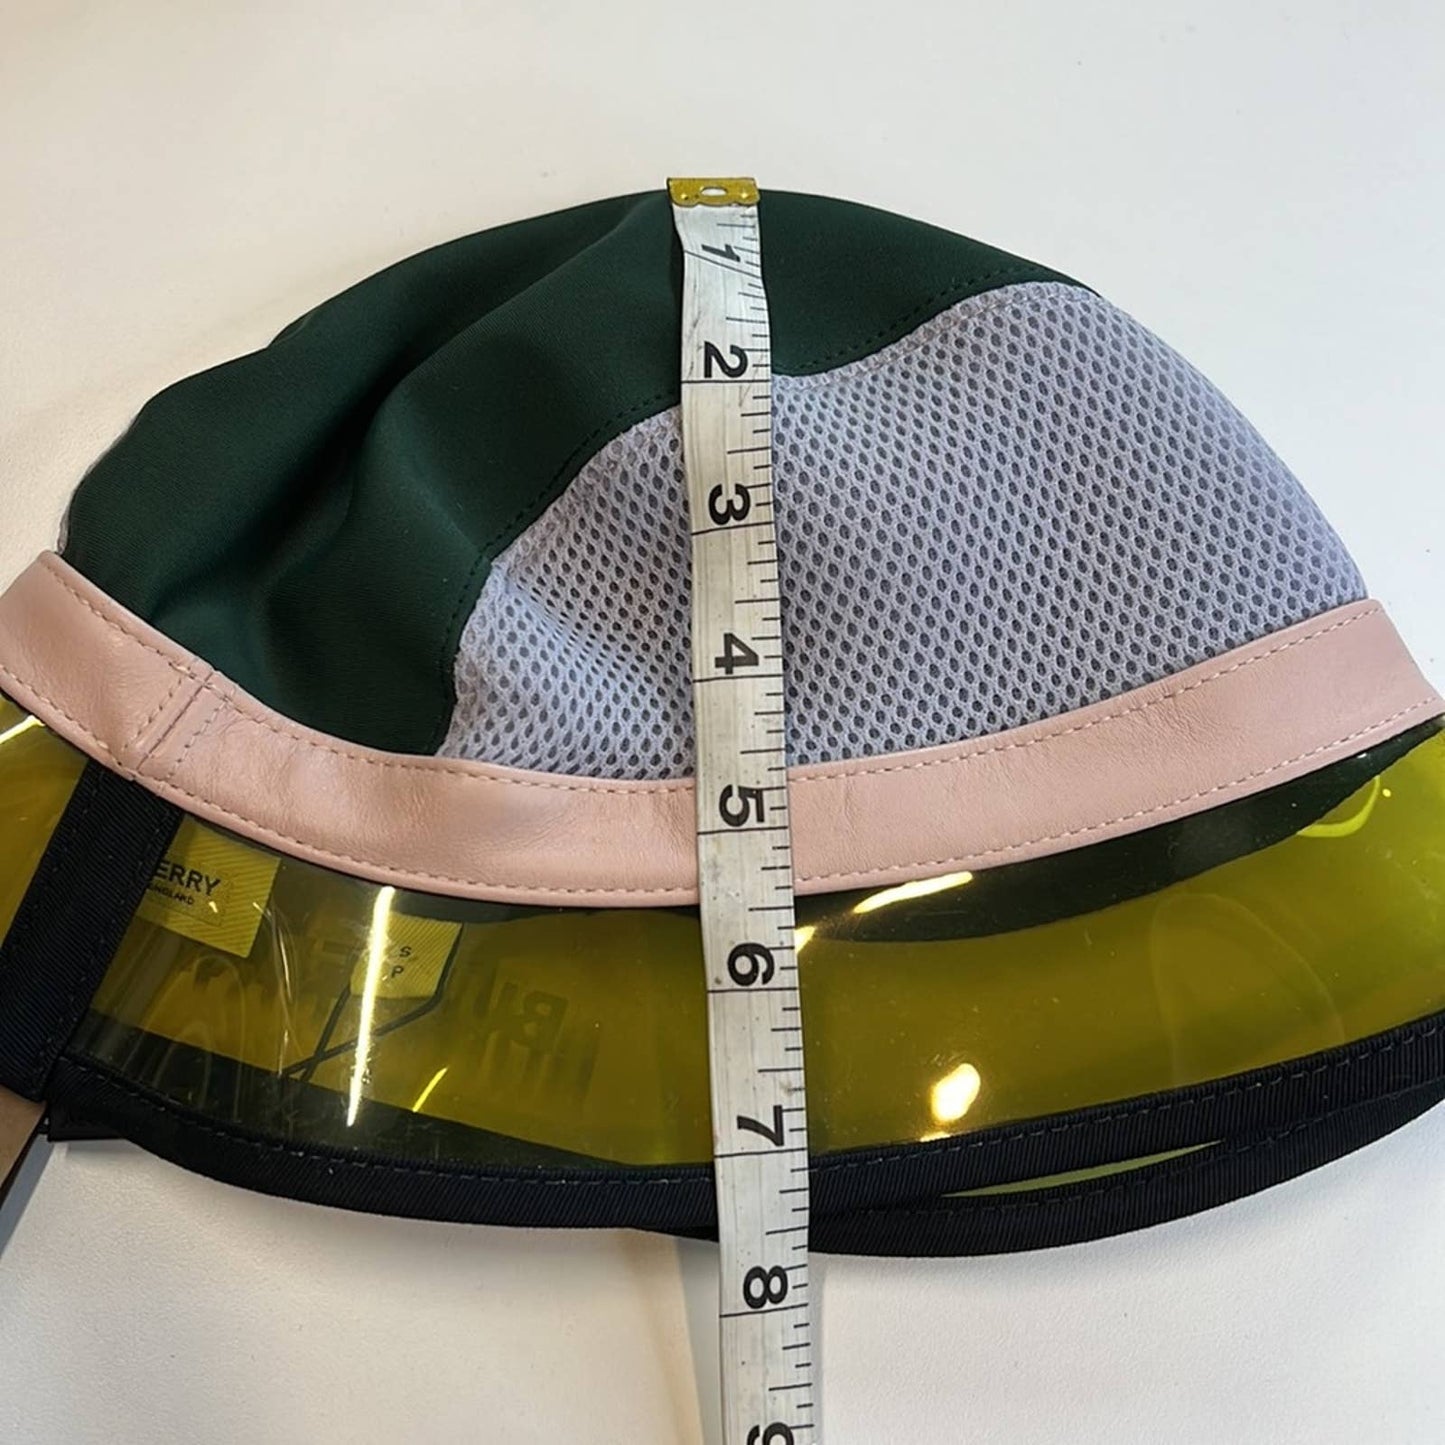 Burberry Small Multi-Color Bucket Hat, Black Trim, Pink, Dark Green, & Lilac